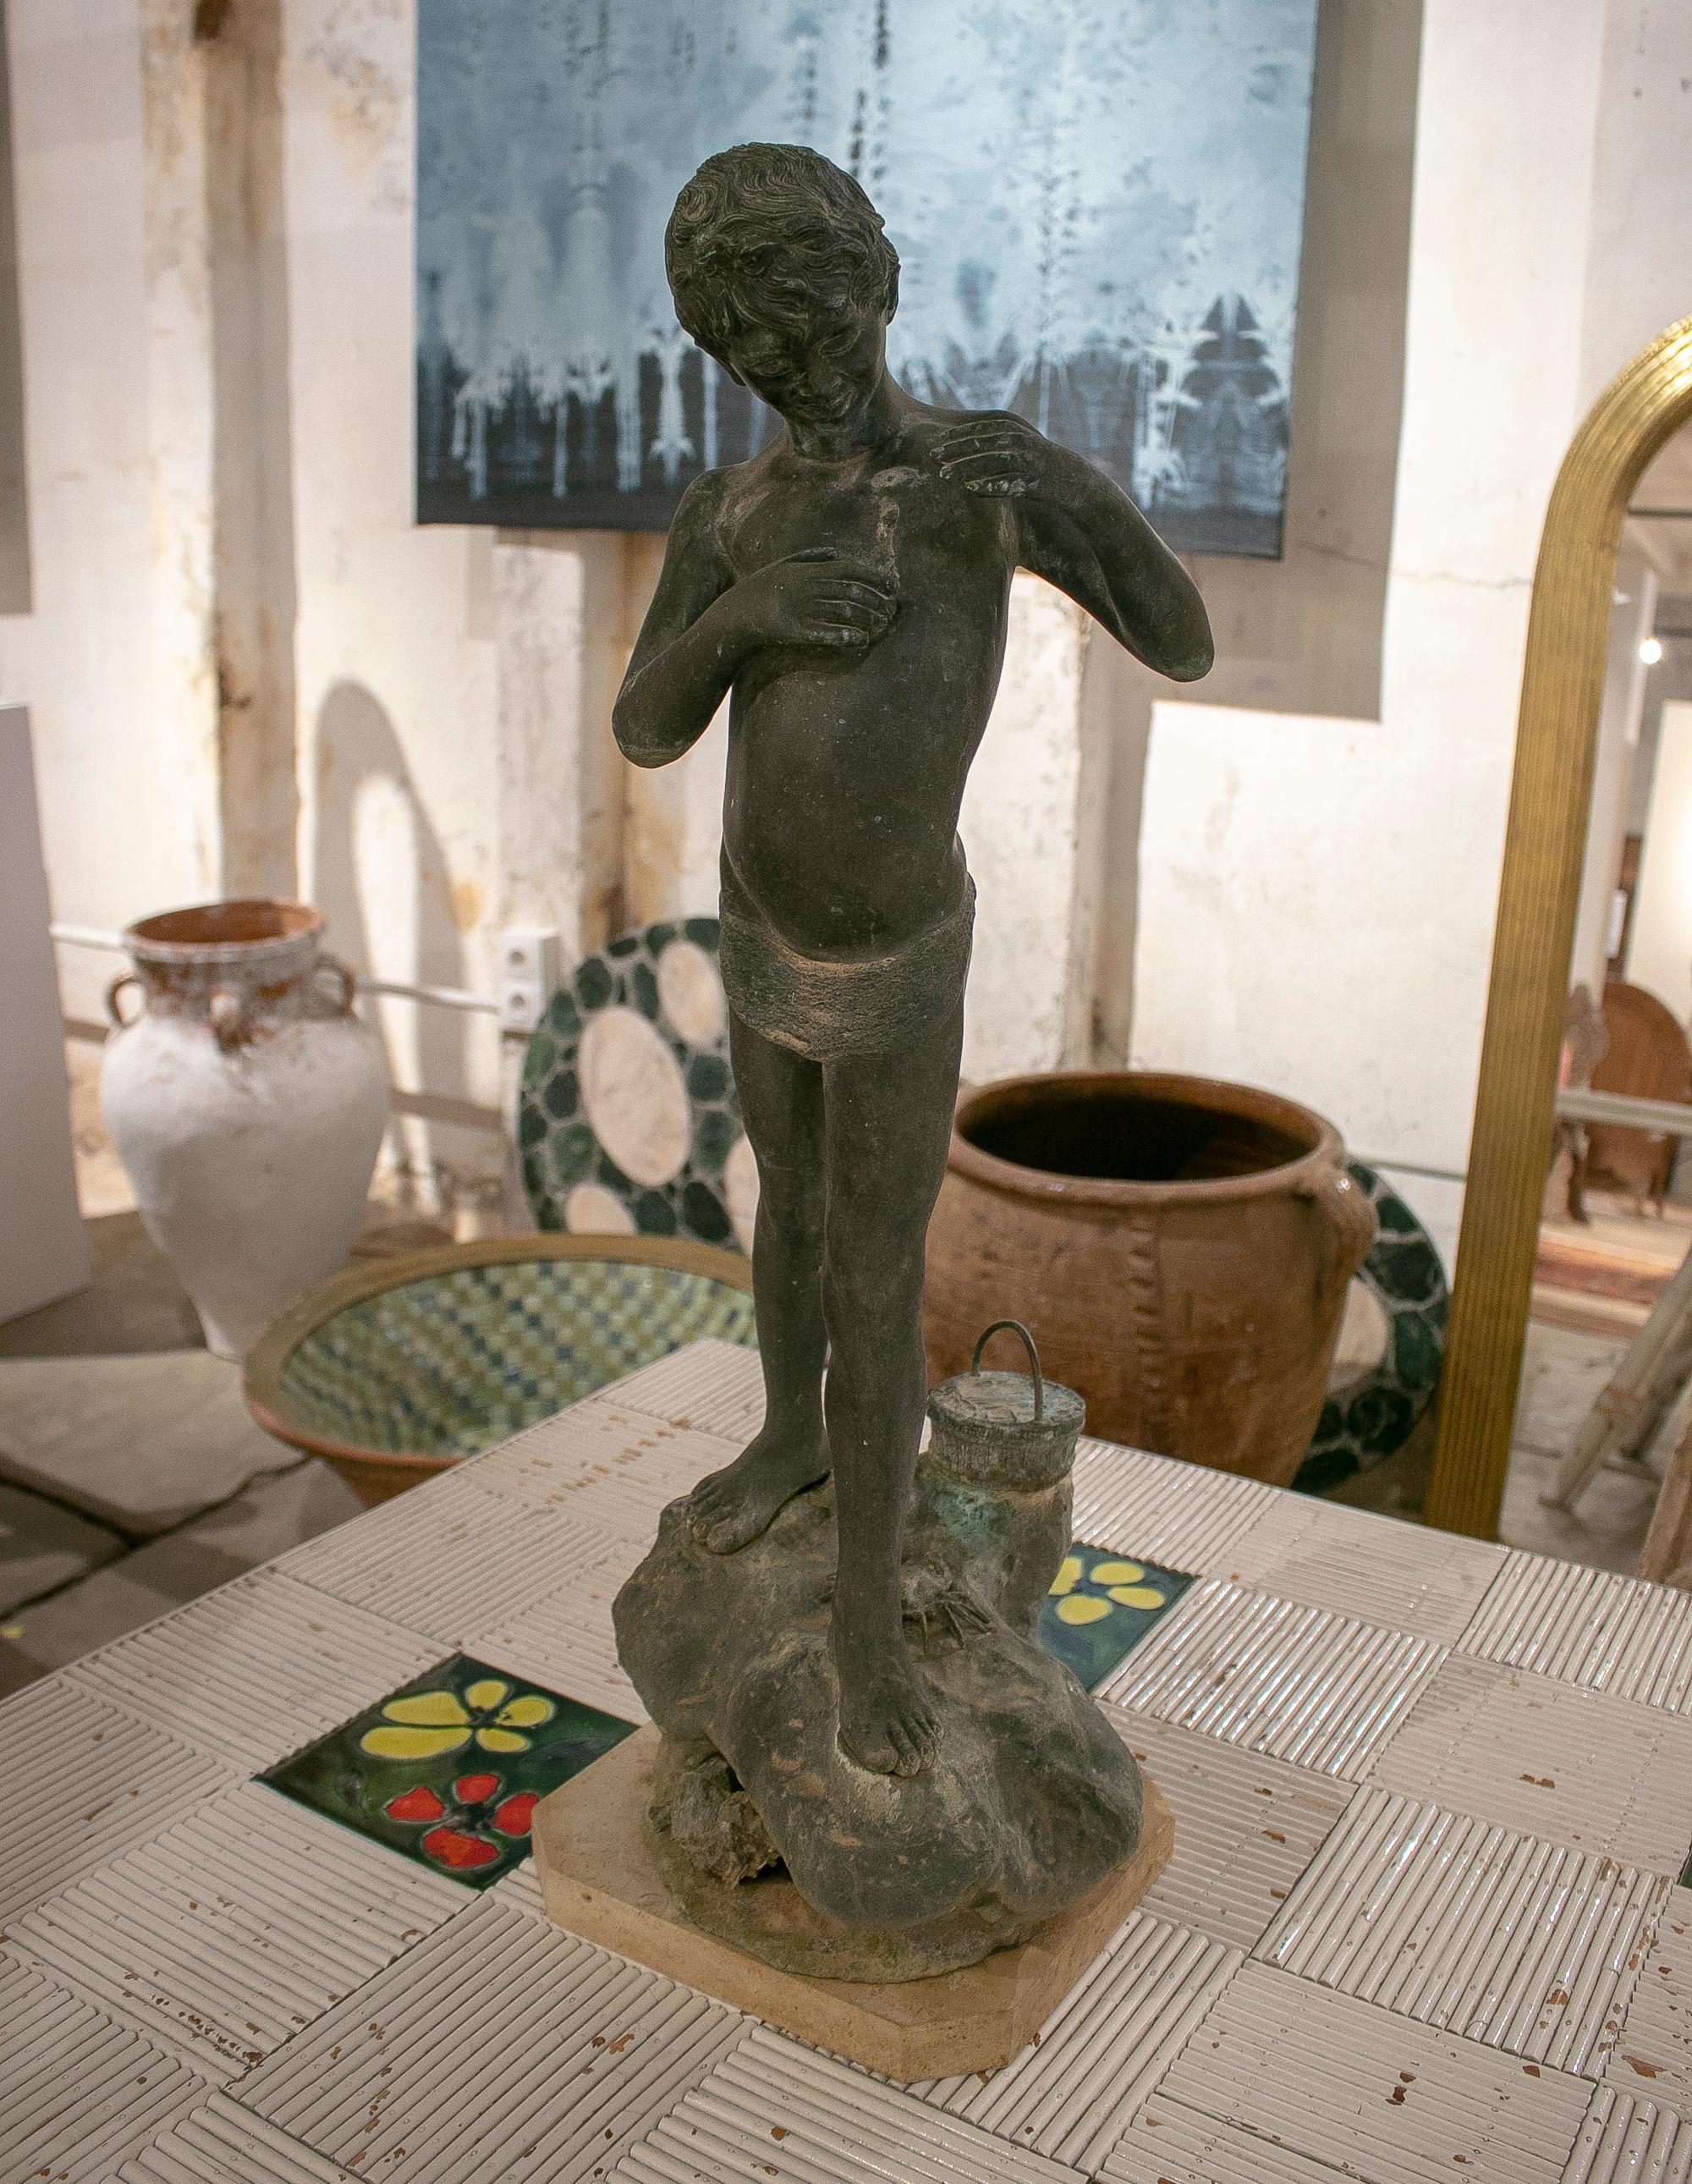 1970s French bronze boy figure statue.